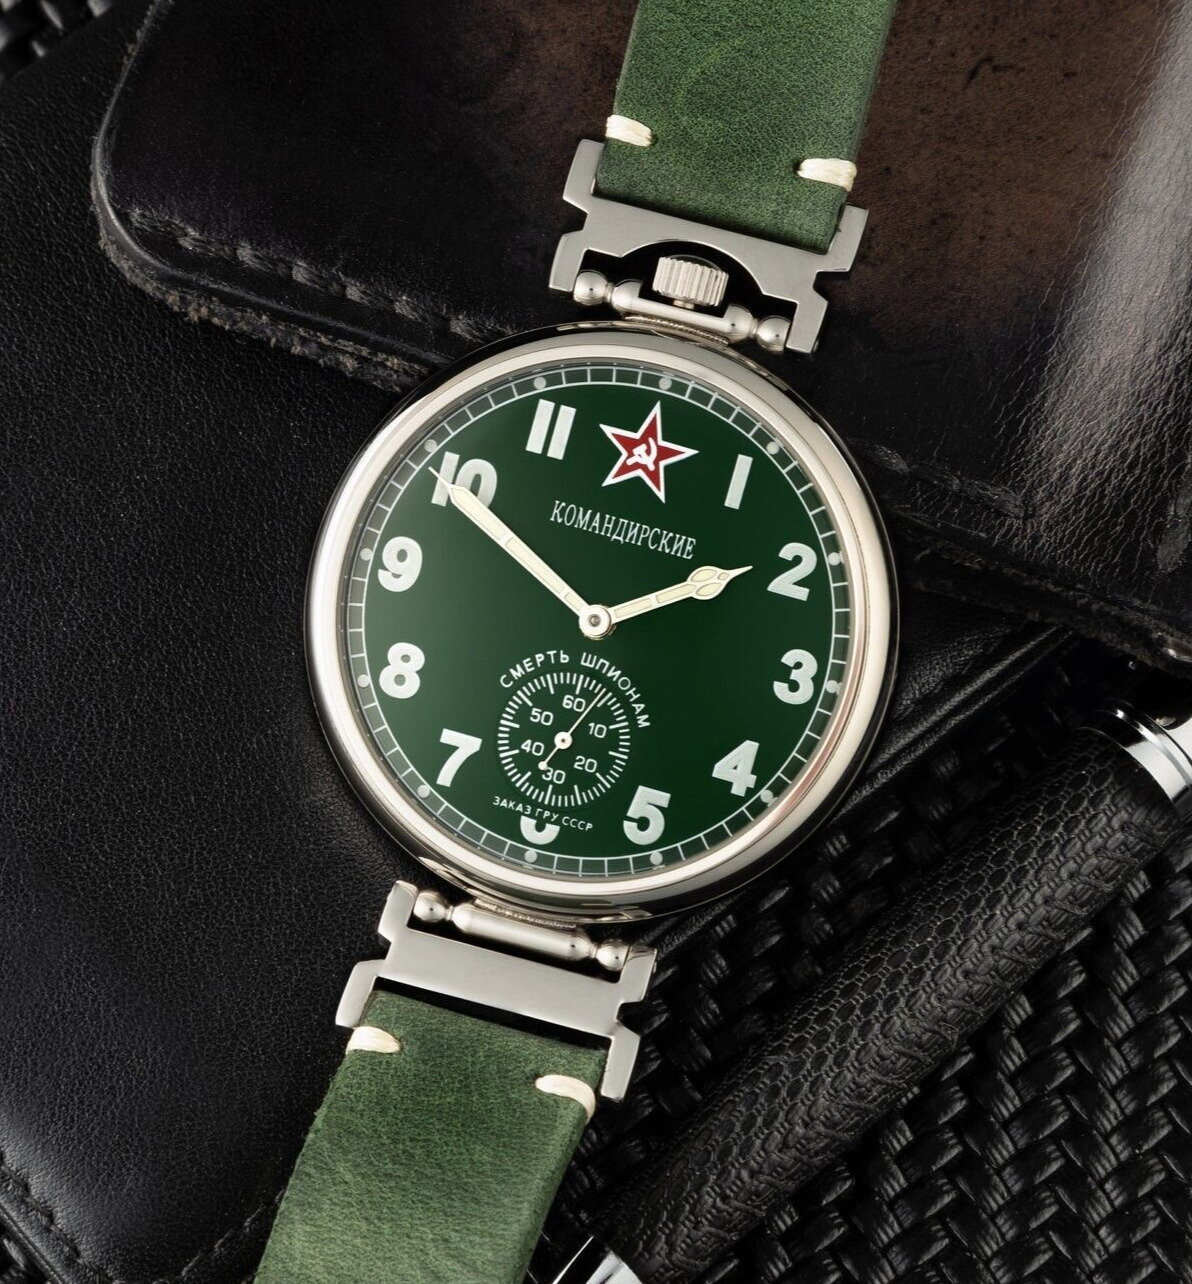 Vintage Molniya Watch Mechanical Molnija komandirskie Soviet Russian USSR Star